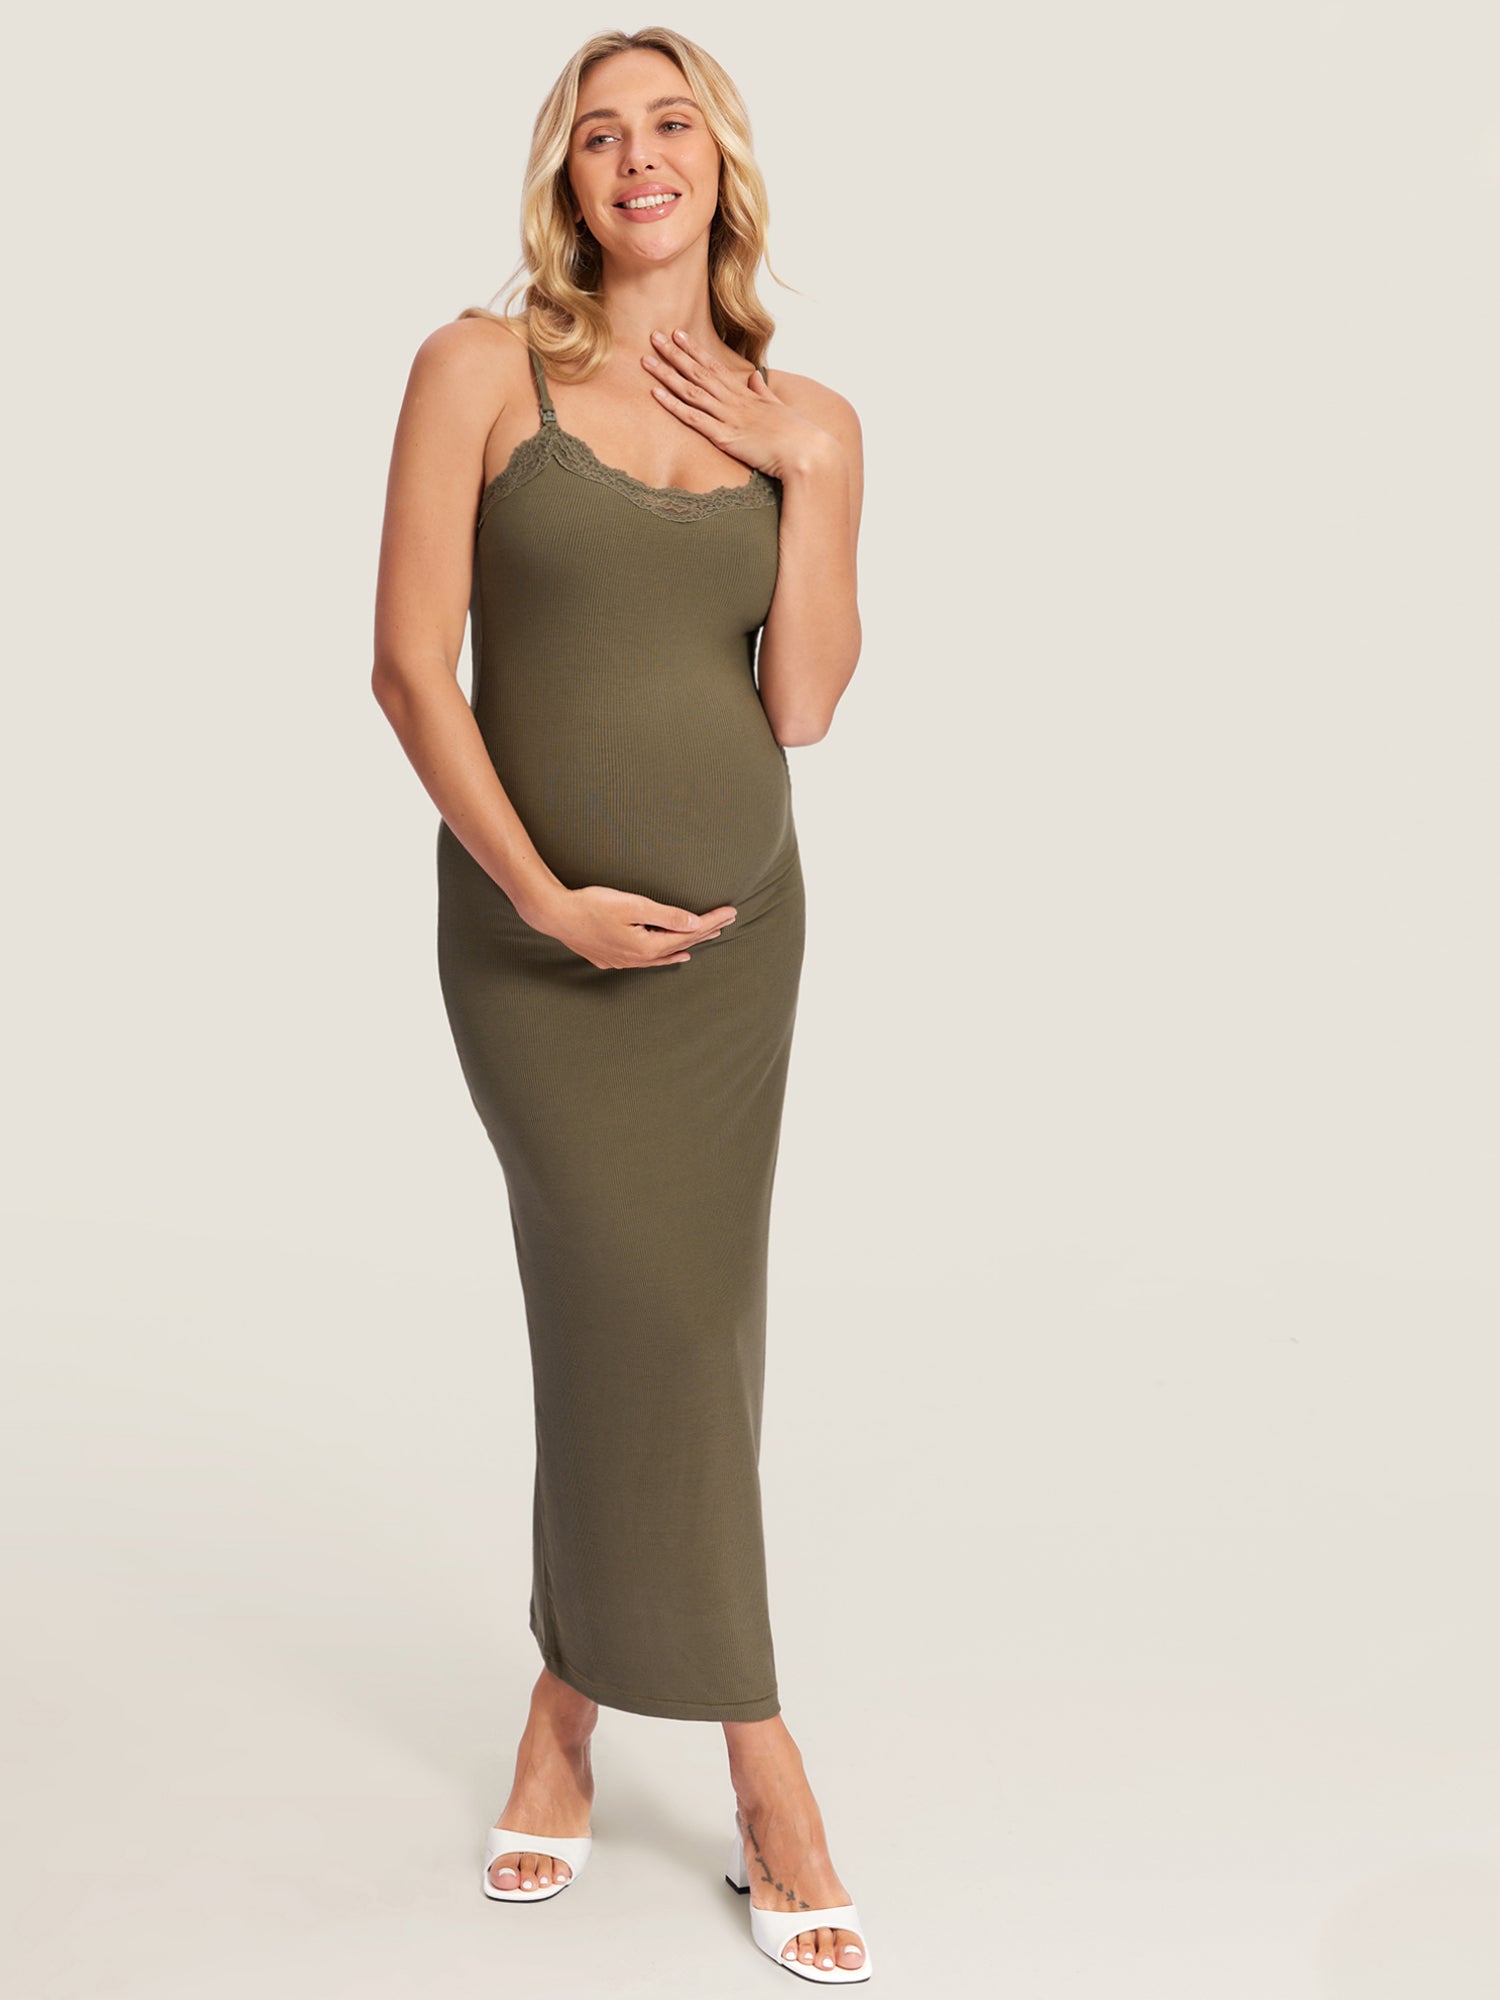 Lacy Ribbed Maternity & Nursing Dress Desert Olive